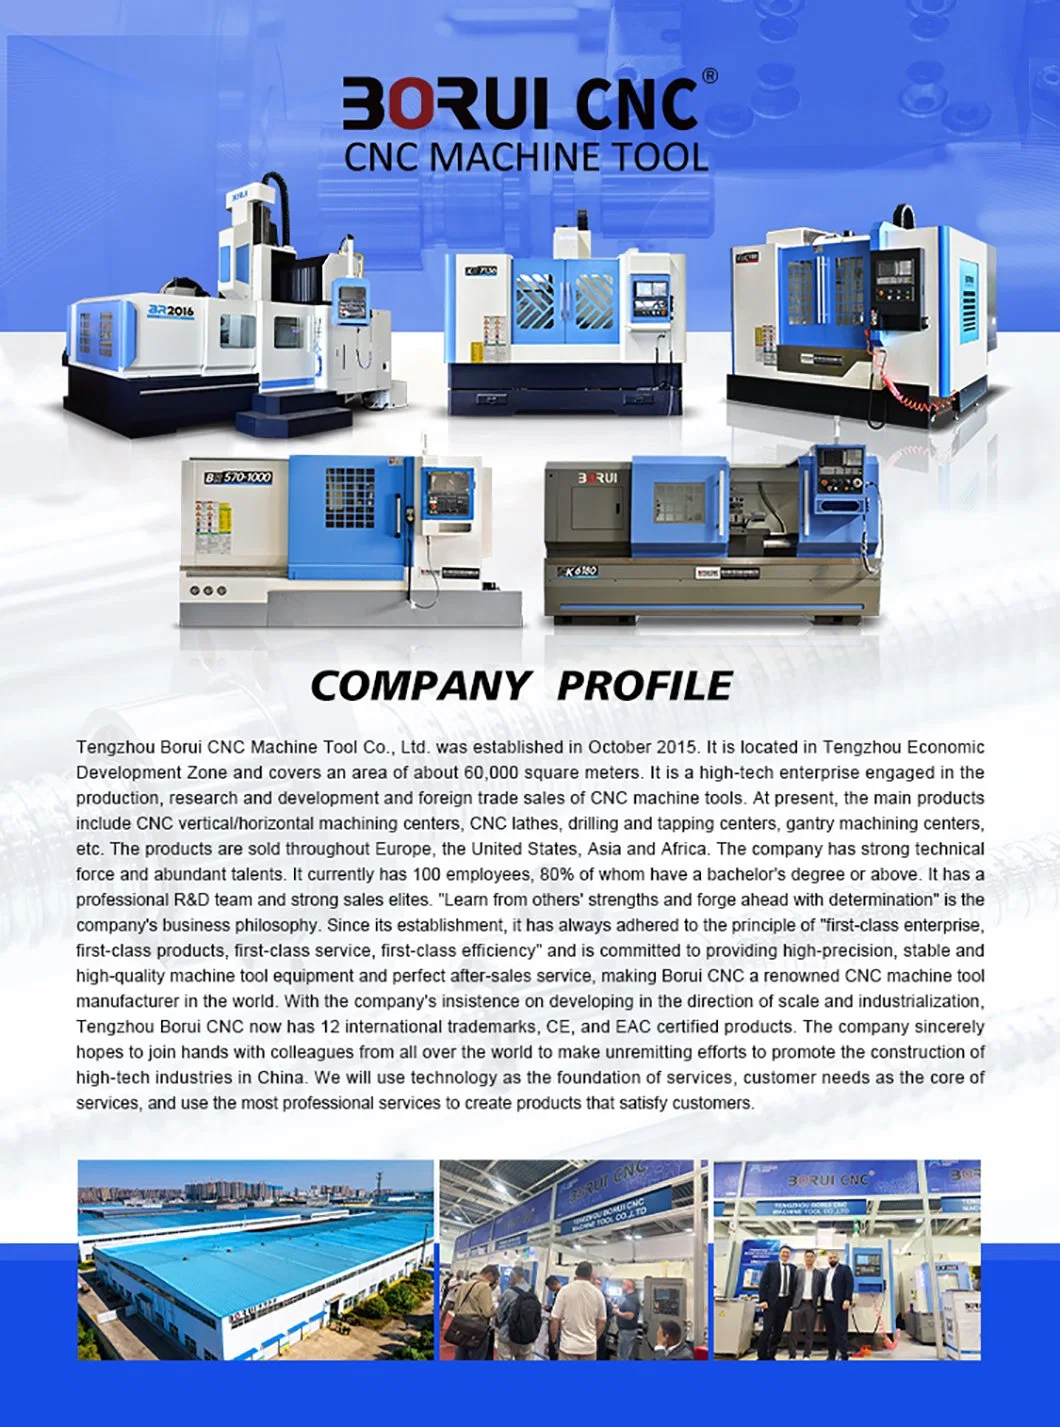 5-Axis Vertical Machining Center Vmc1160 CNC Milling Machine Vmc855